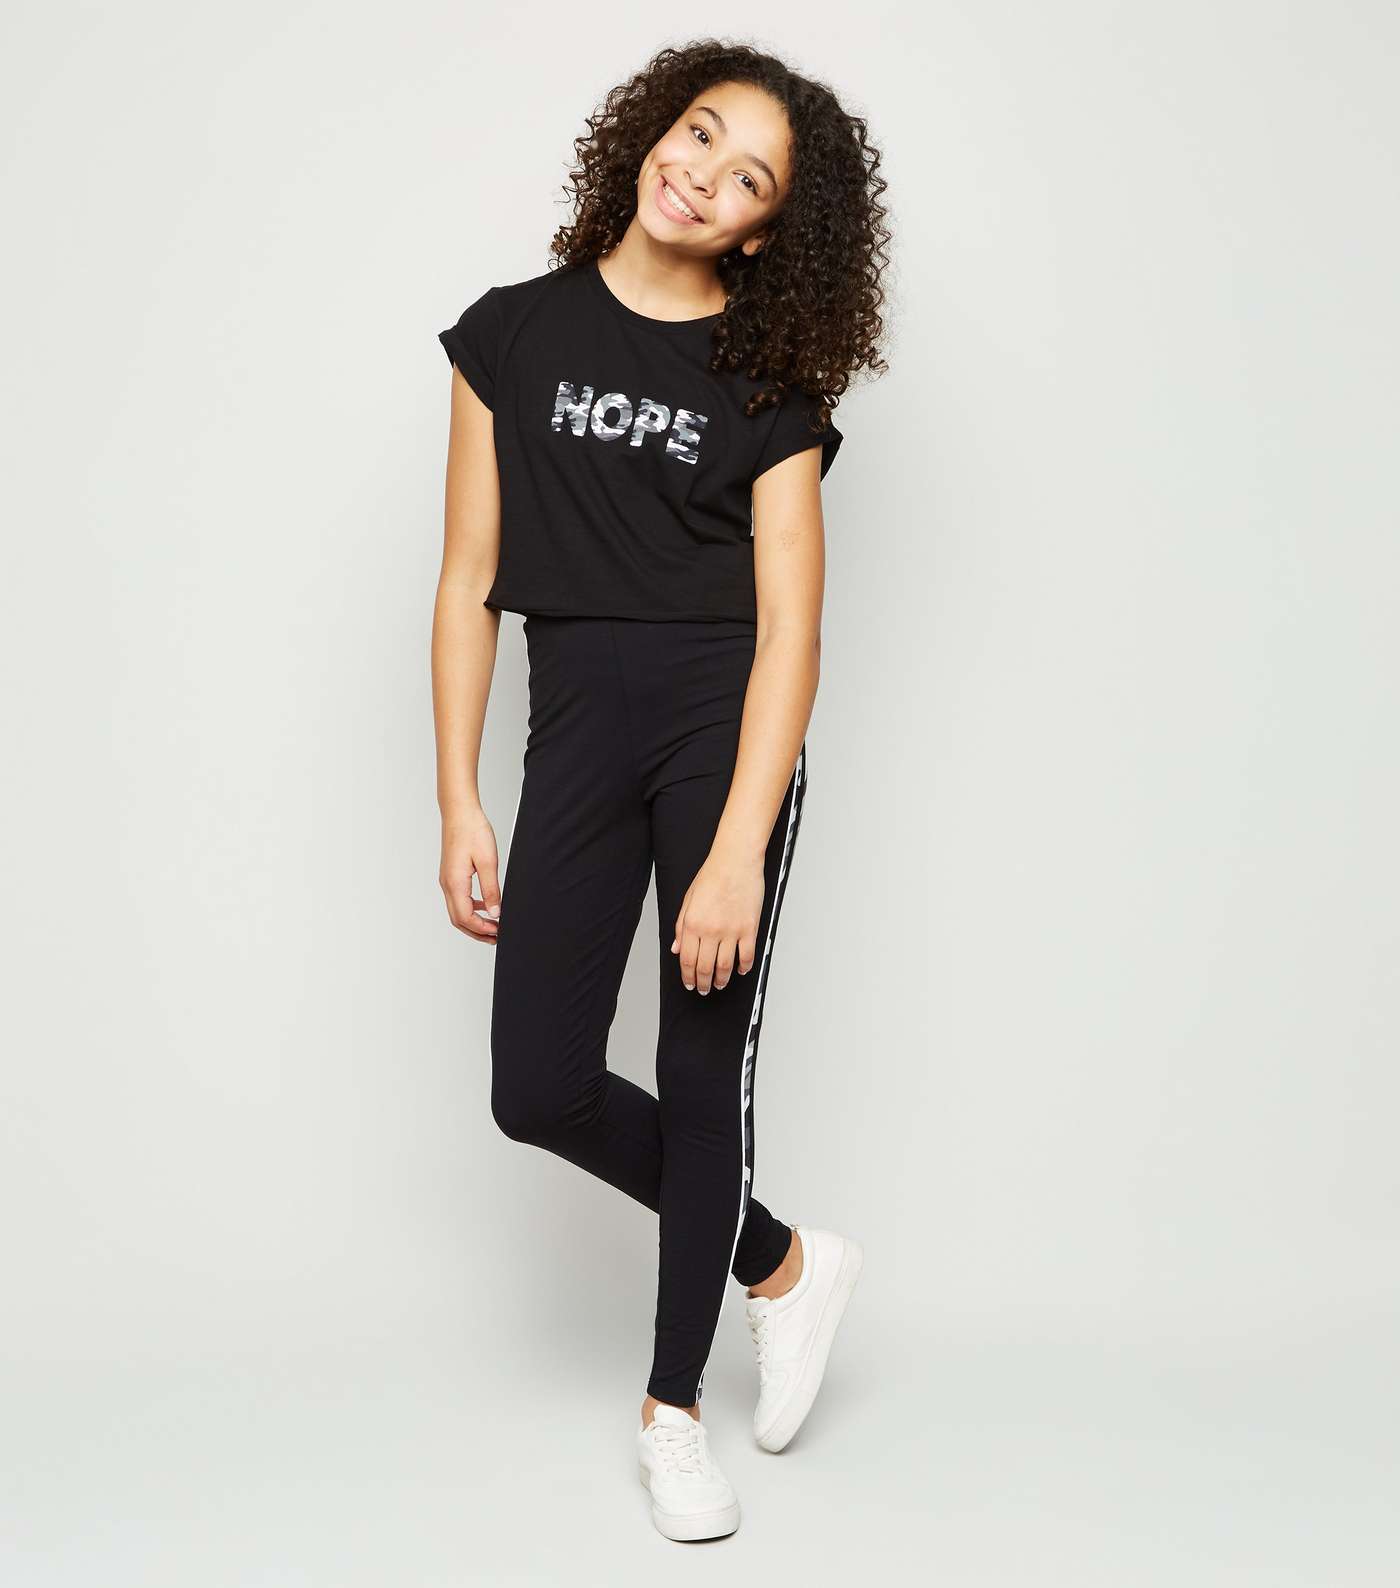 Girls Black Camo Hope Slogan T-Shirt Image 2